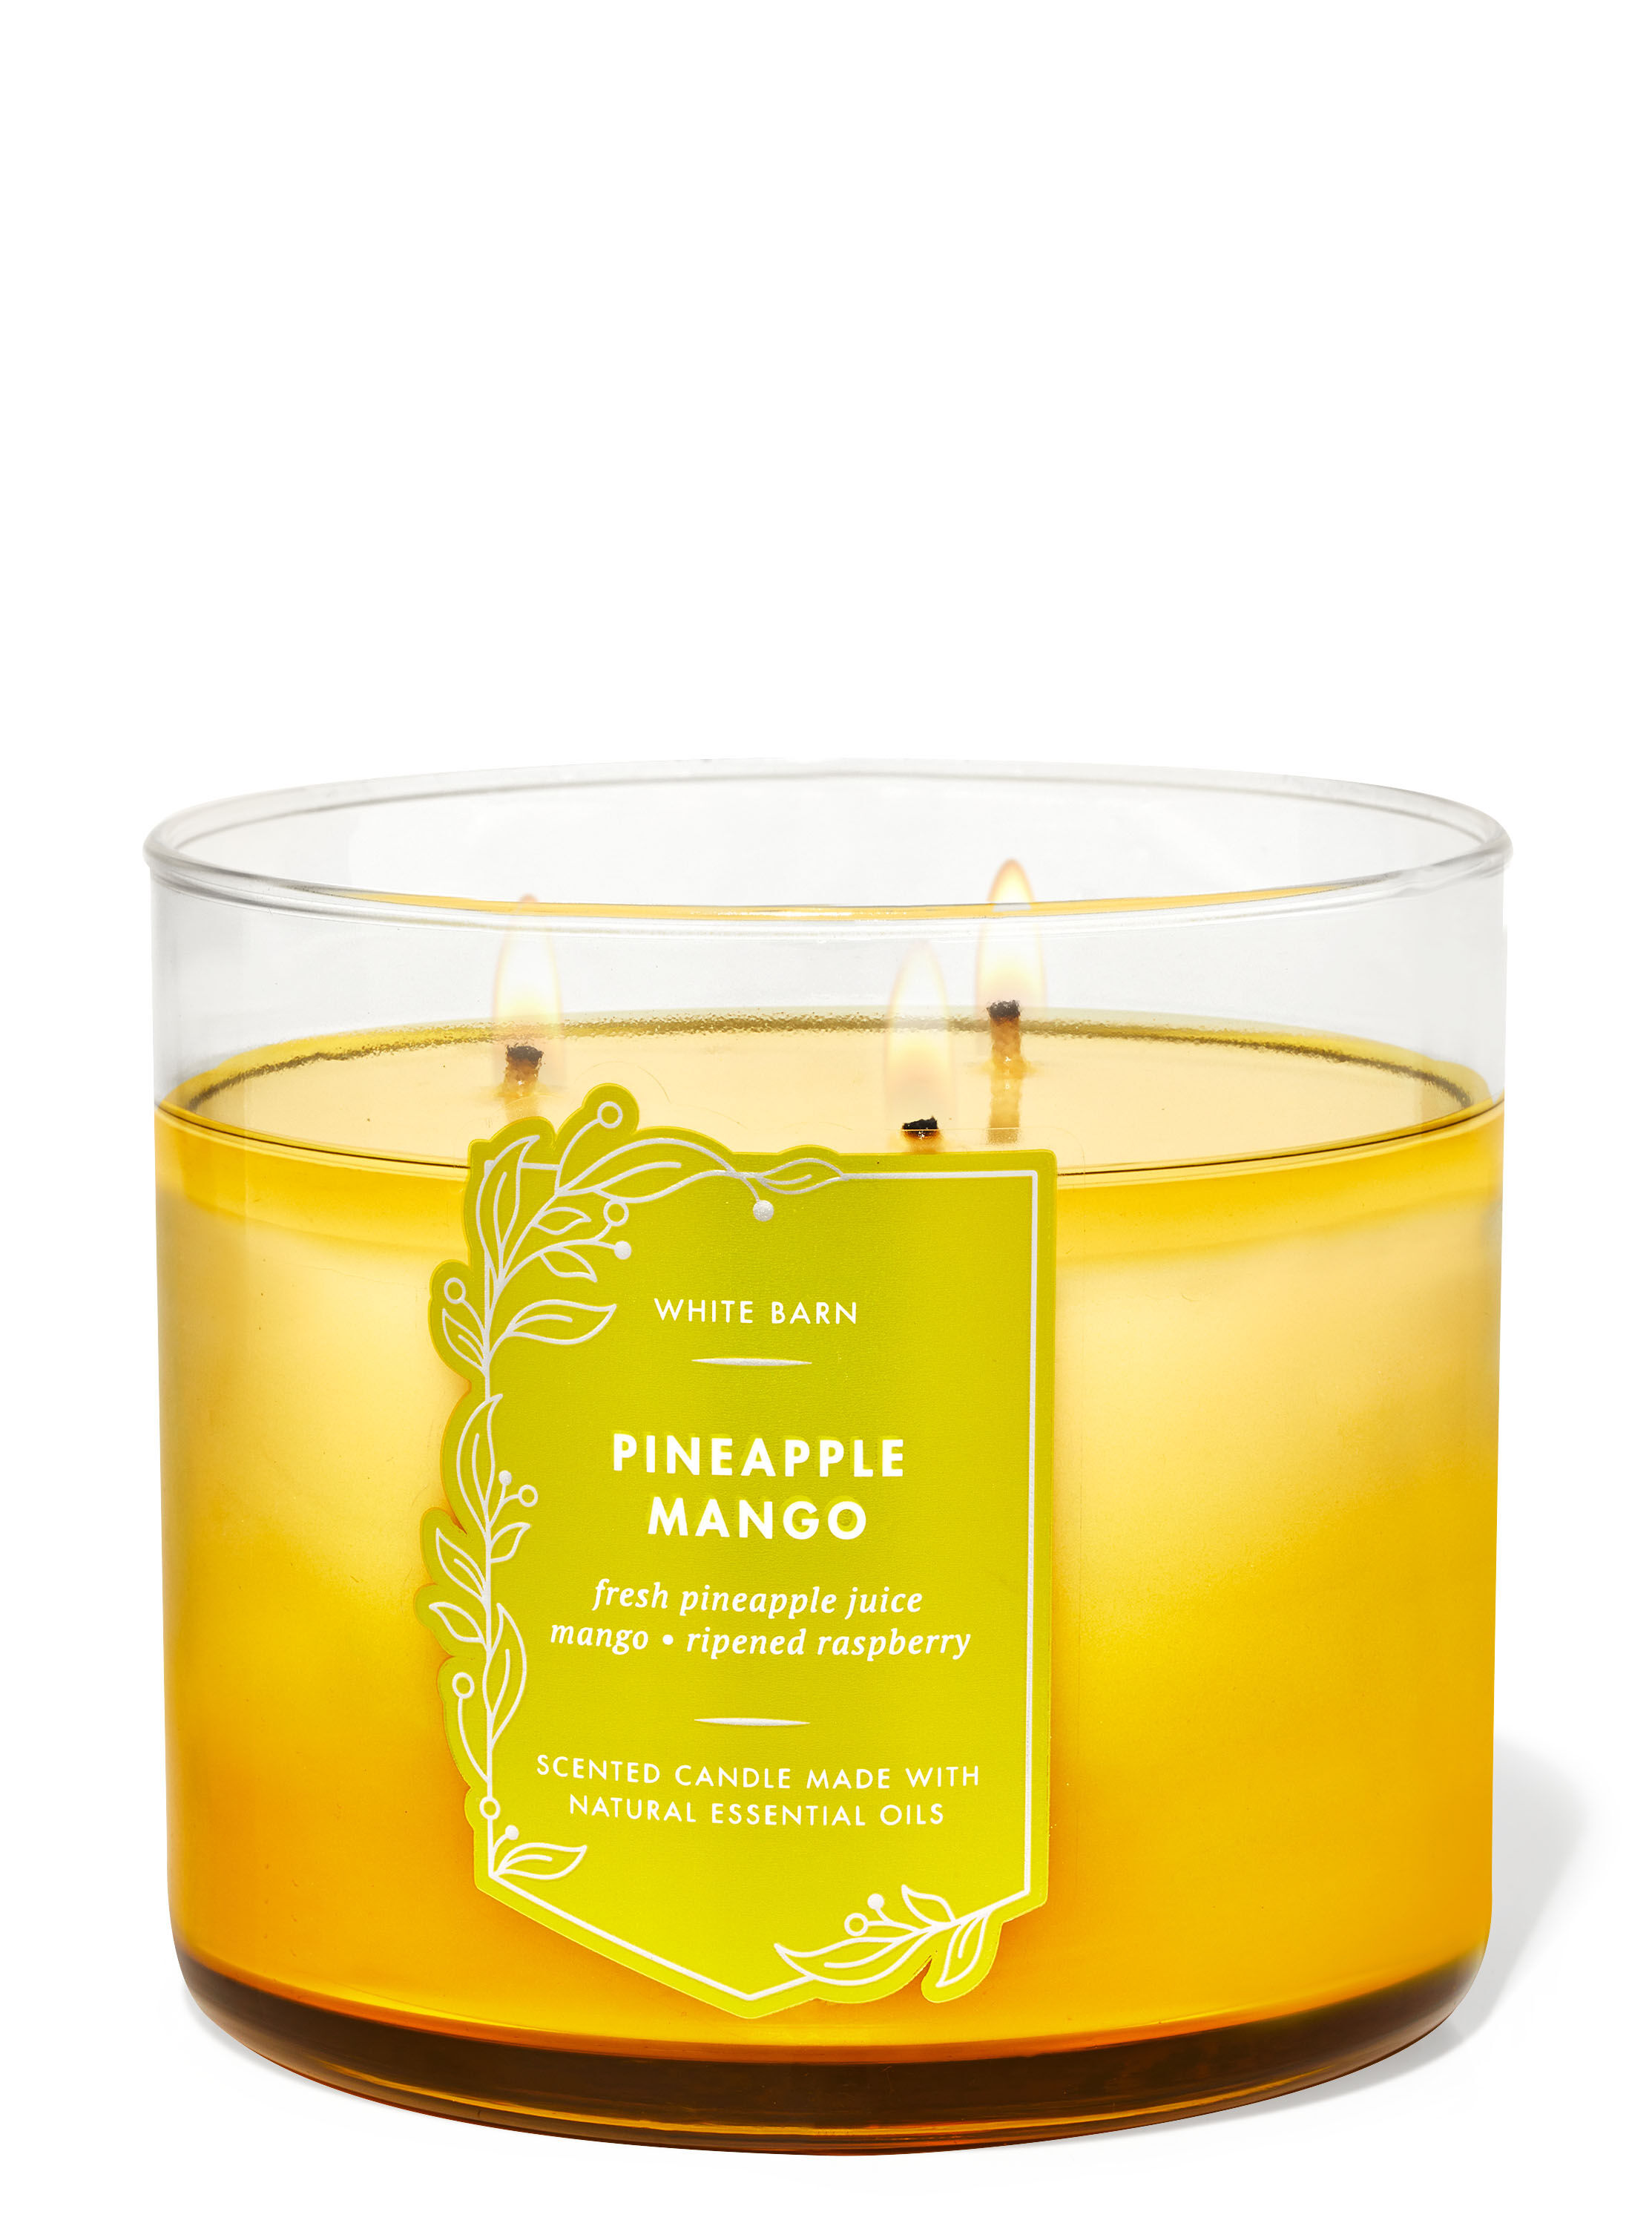 Pineapple Mango 3-Wick Candle